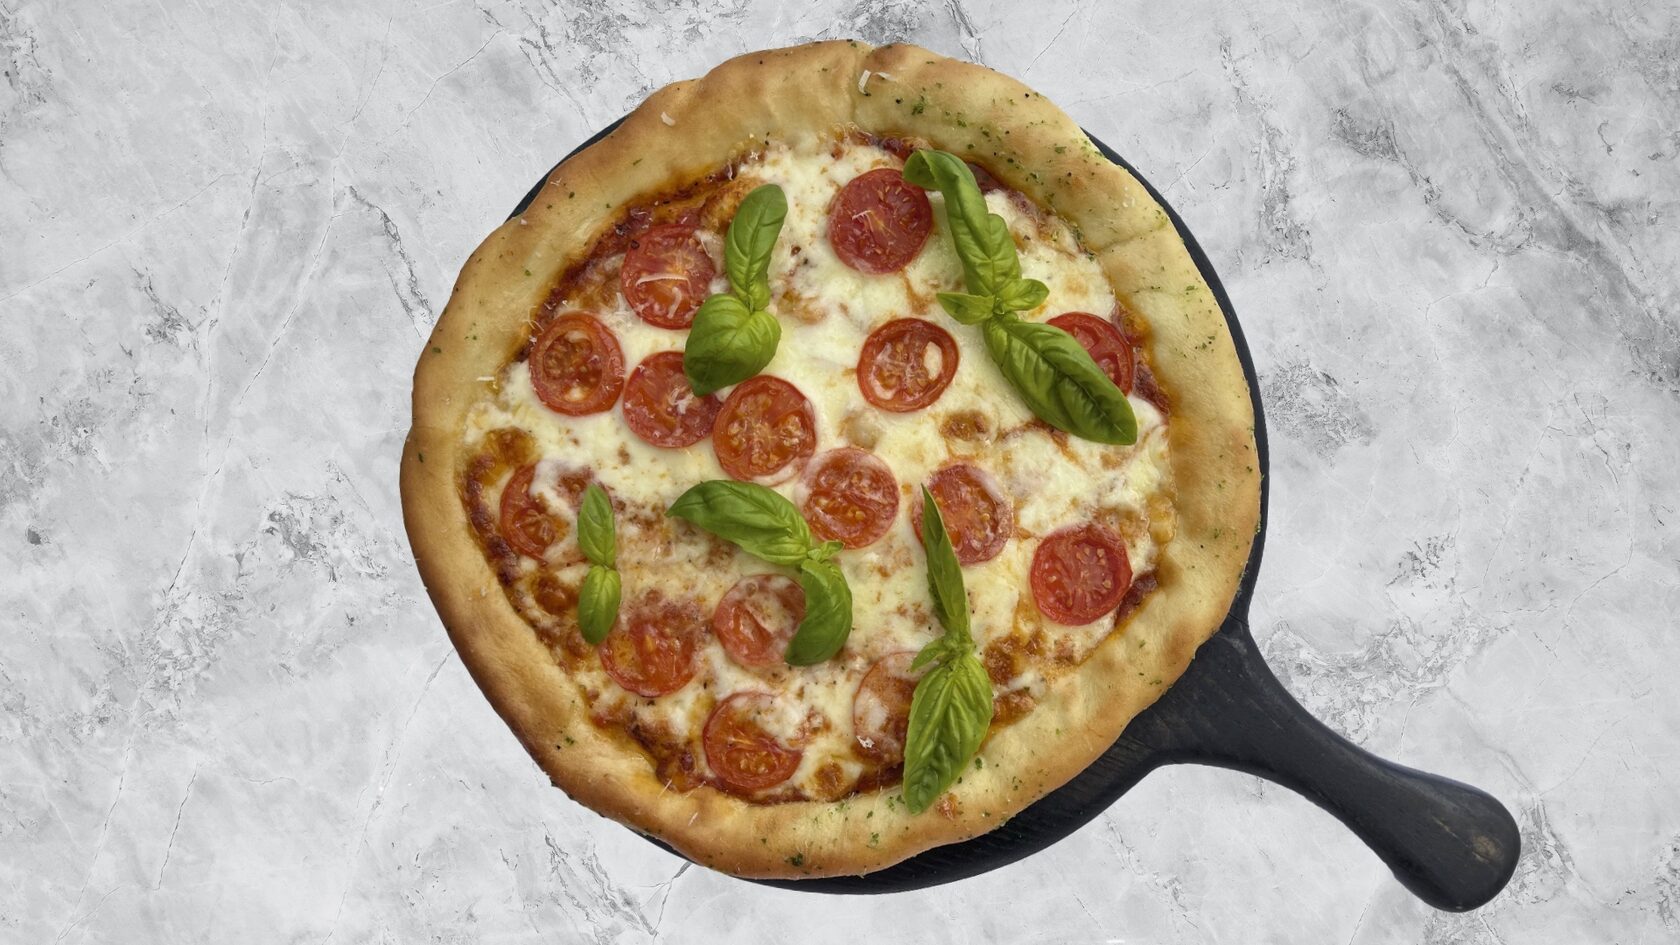 томатный соус на пиццу рецепт с фото фото 98